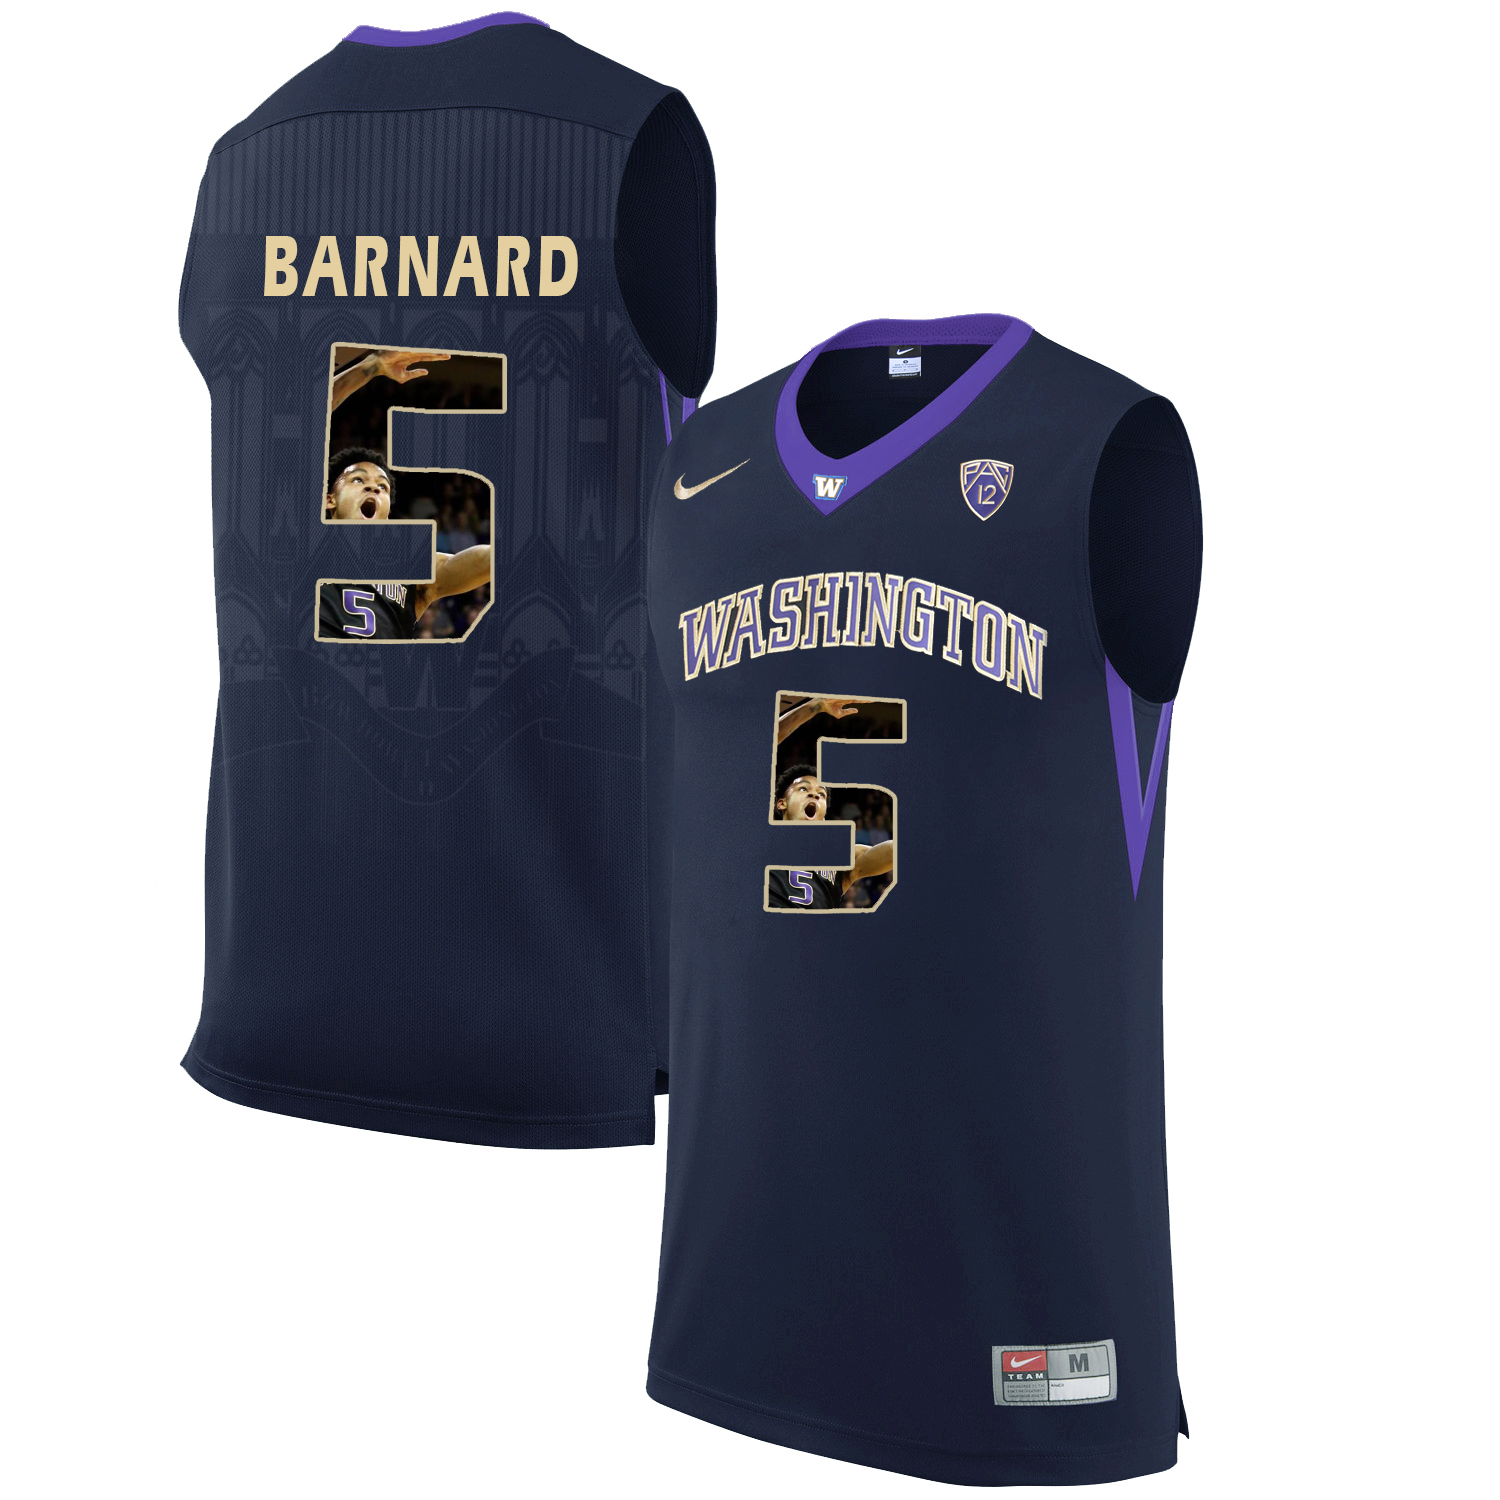 Washington Huskies 5 Quin Barnard Black With Portait College Basketball Jersey